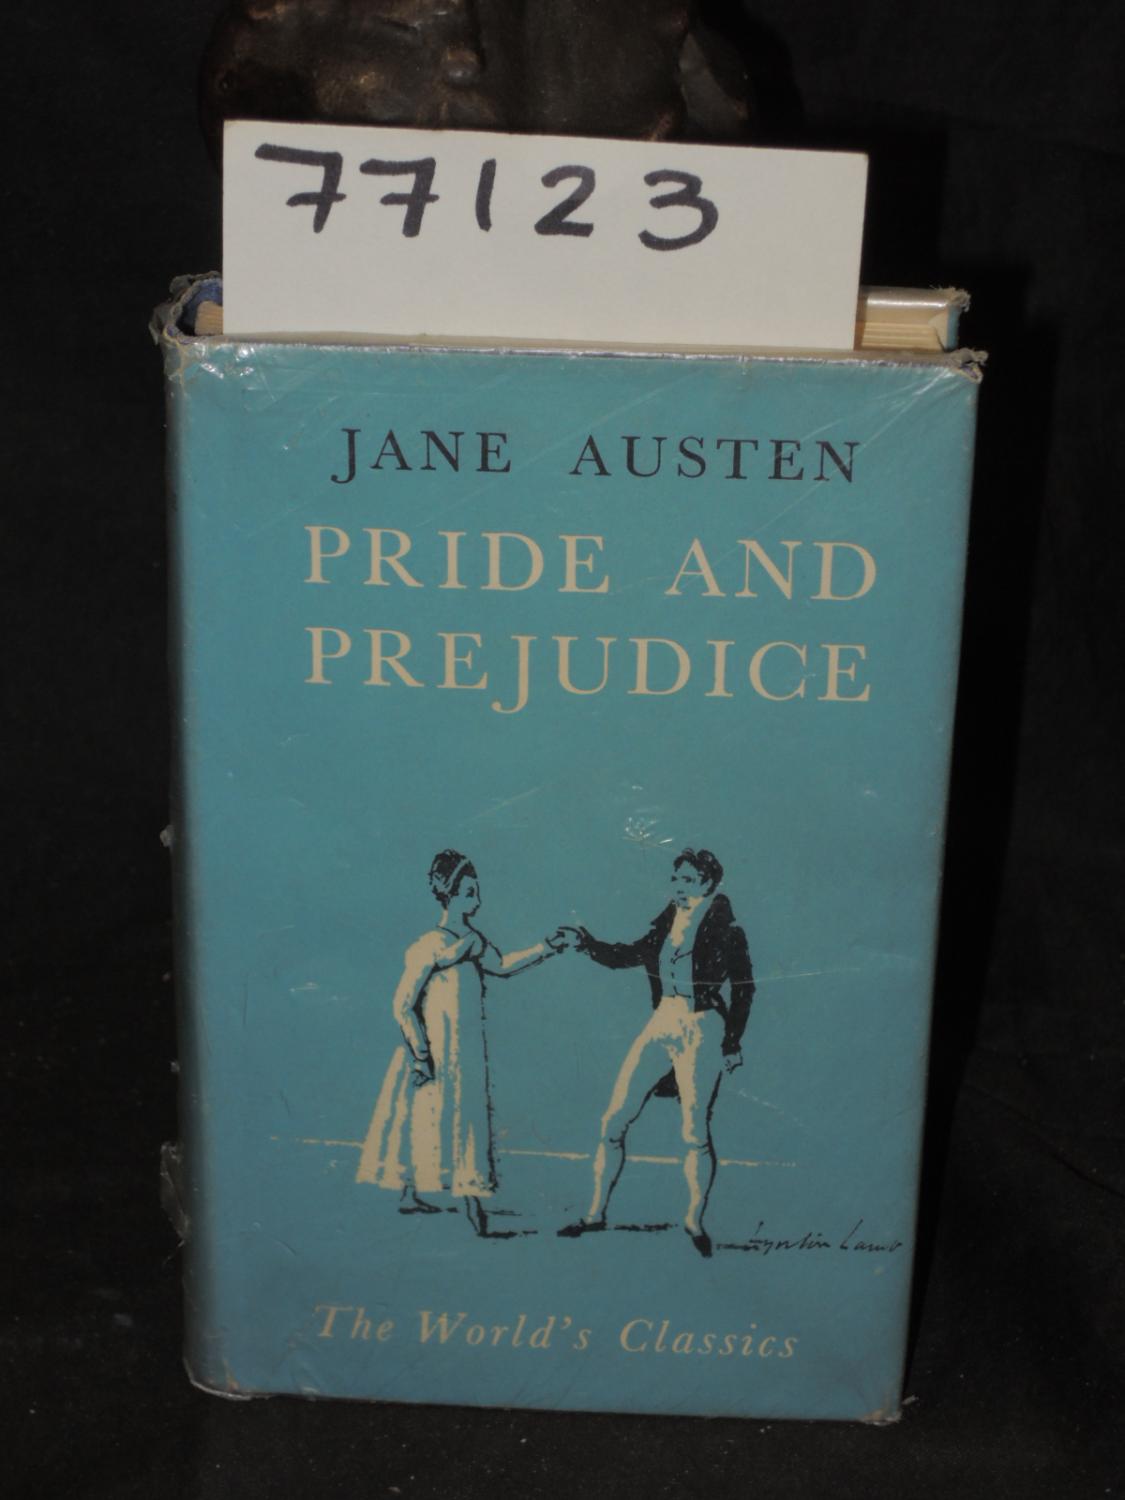 Pride and Prejudice - Austen, Jane and Chapman, R.W.